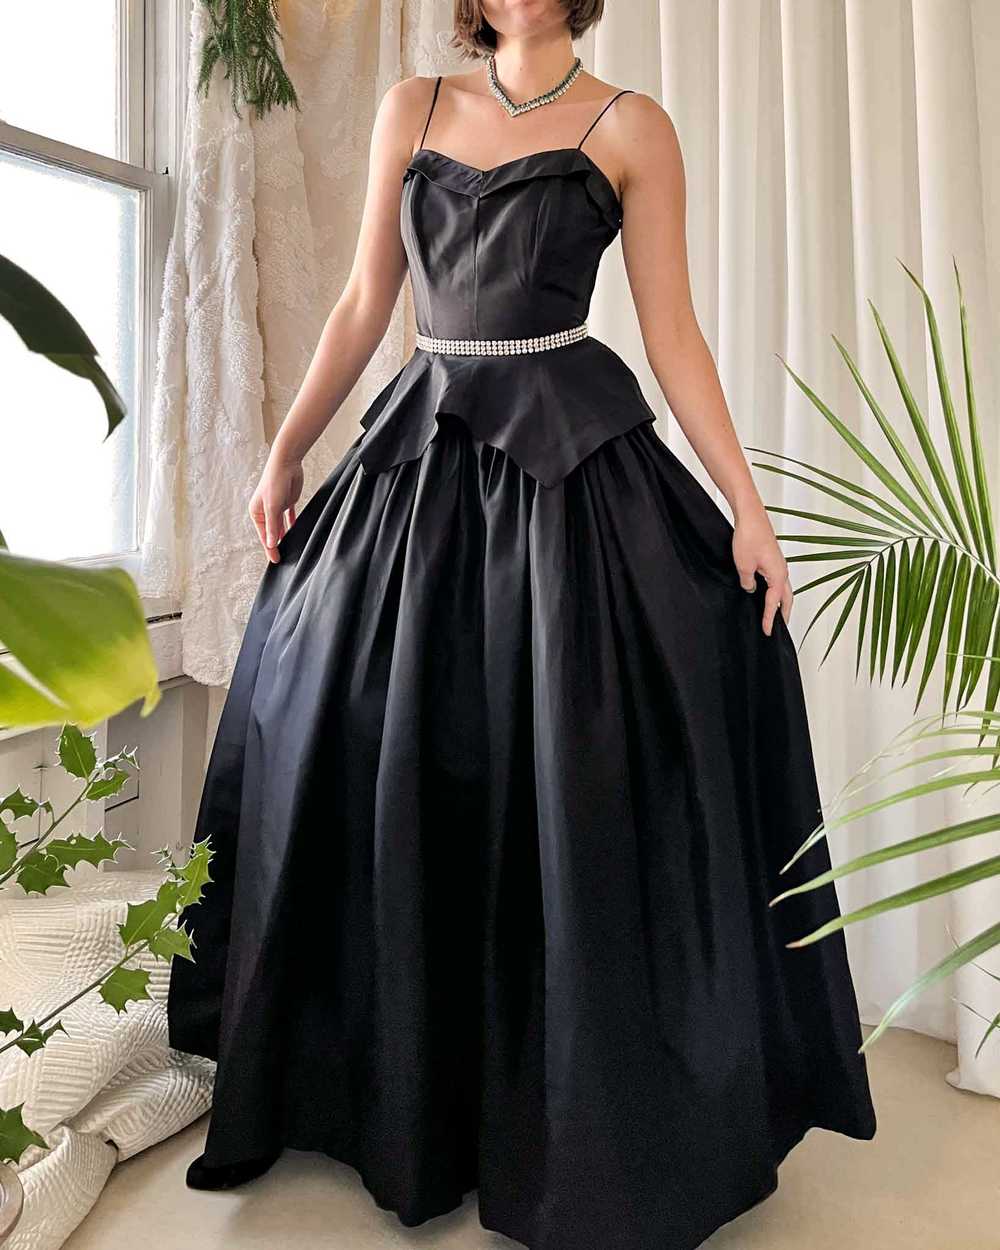 40s Black Peplum Gown - image 4